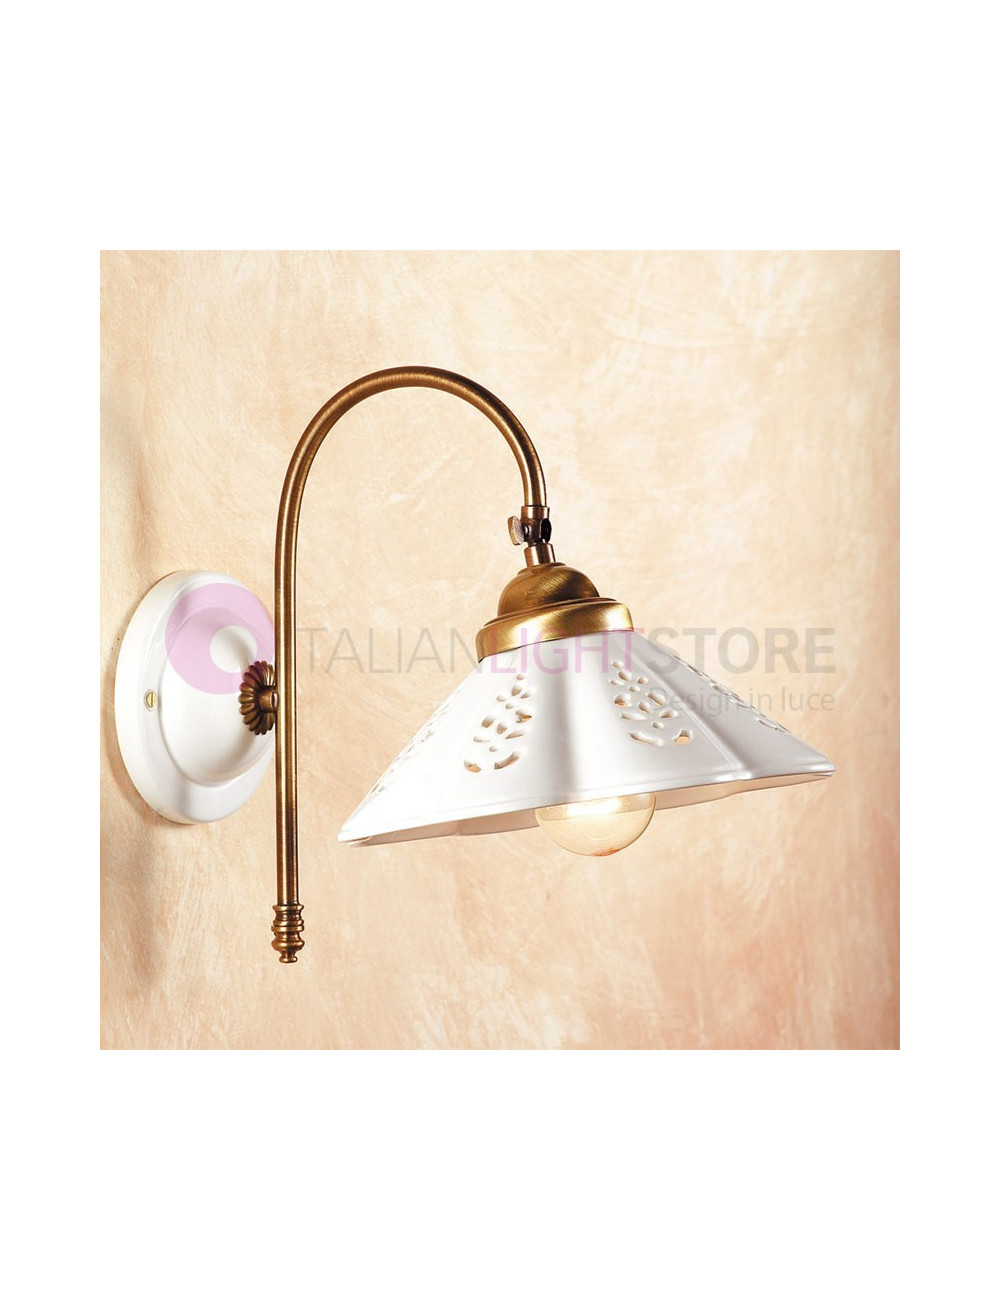 CALCINAIA Wall Lamp Sconce Ceramic and Brass Rustic-Style Country - Ceramiche Borso